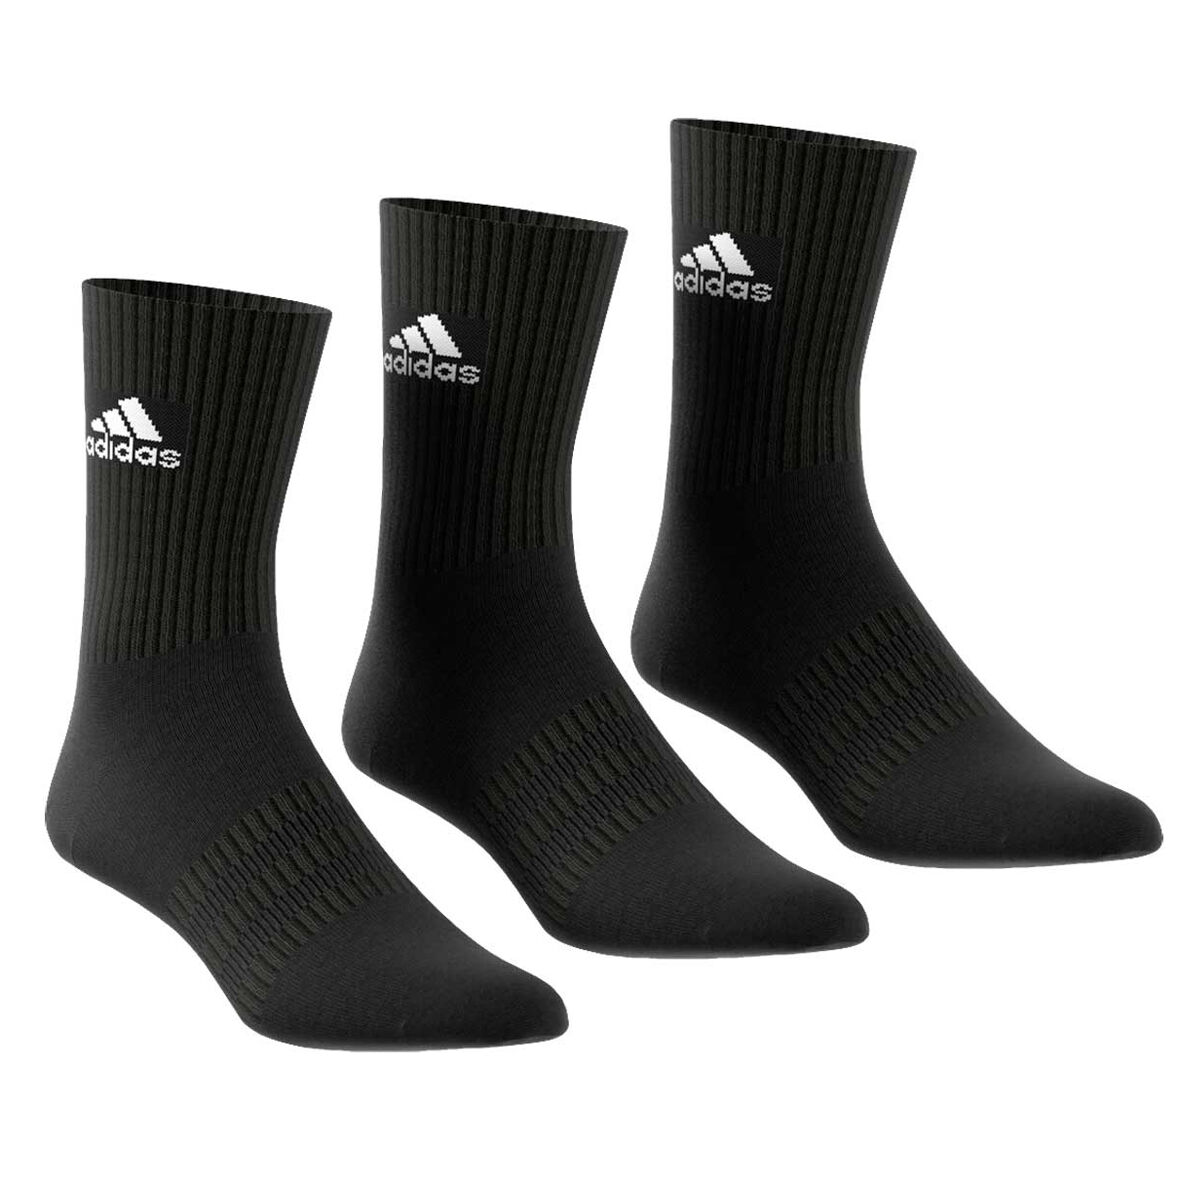 adidas cricket socks